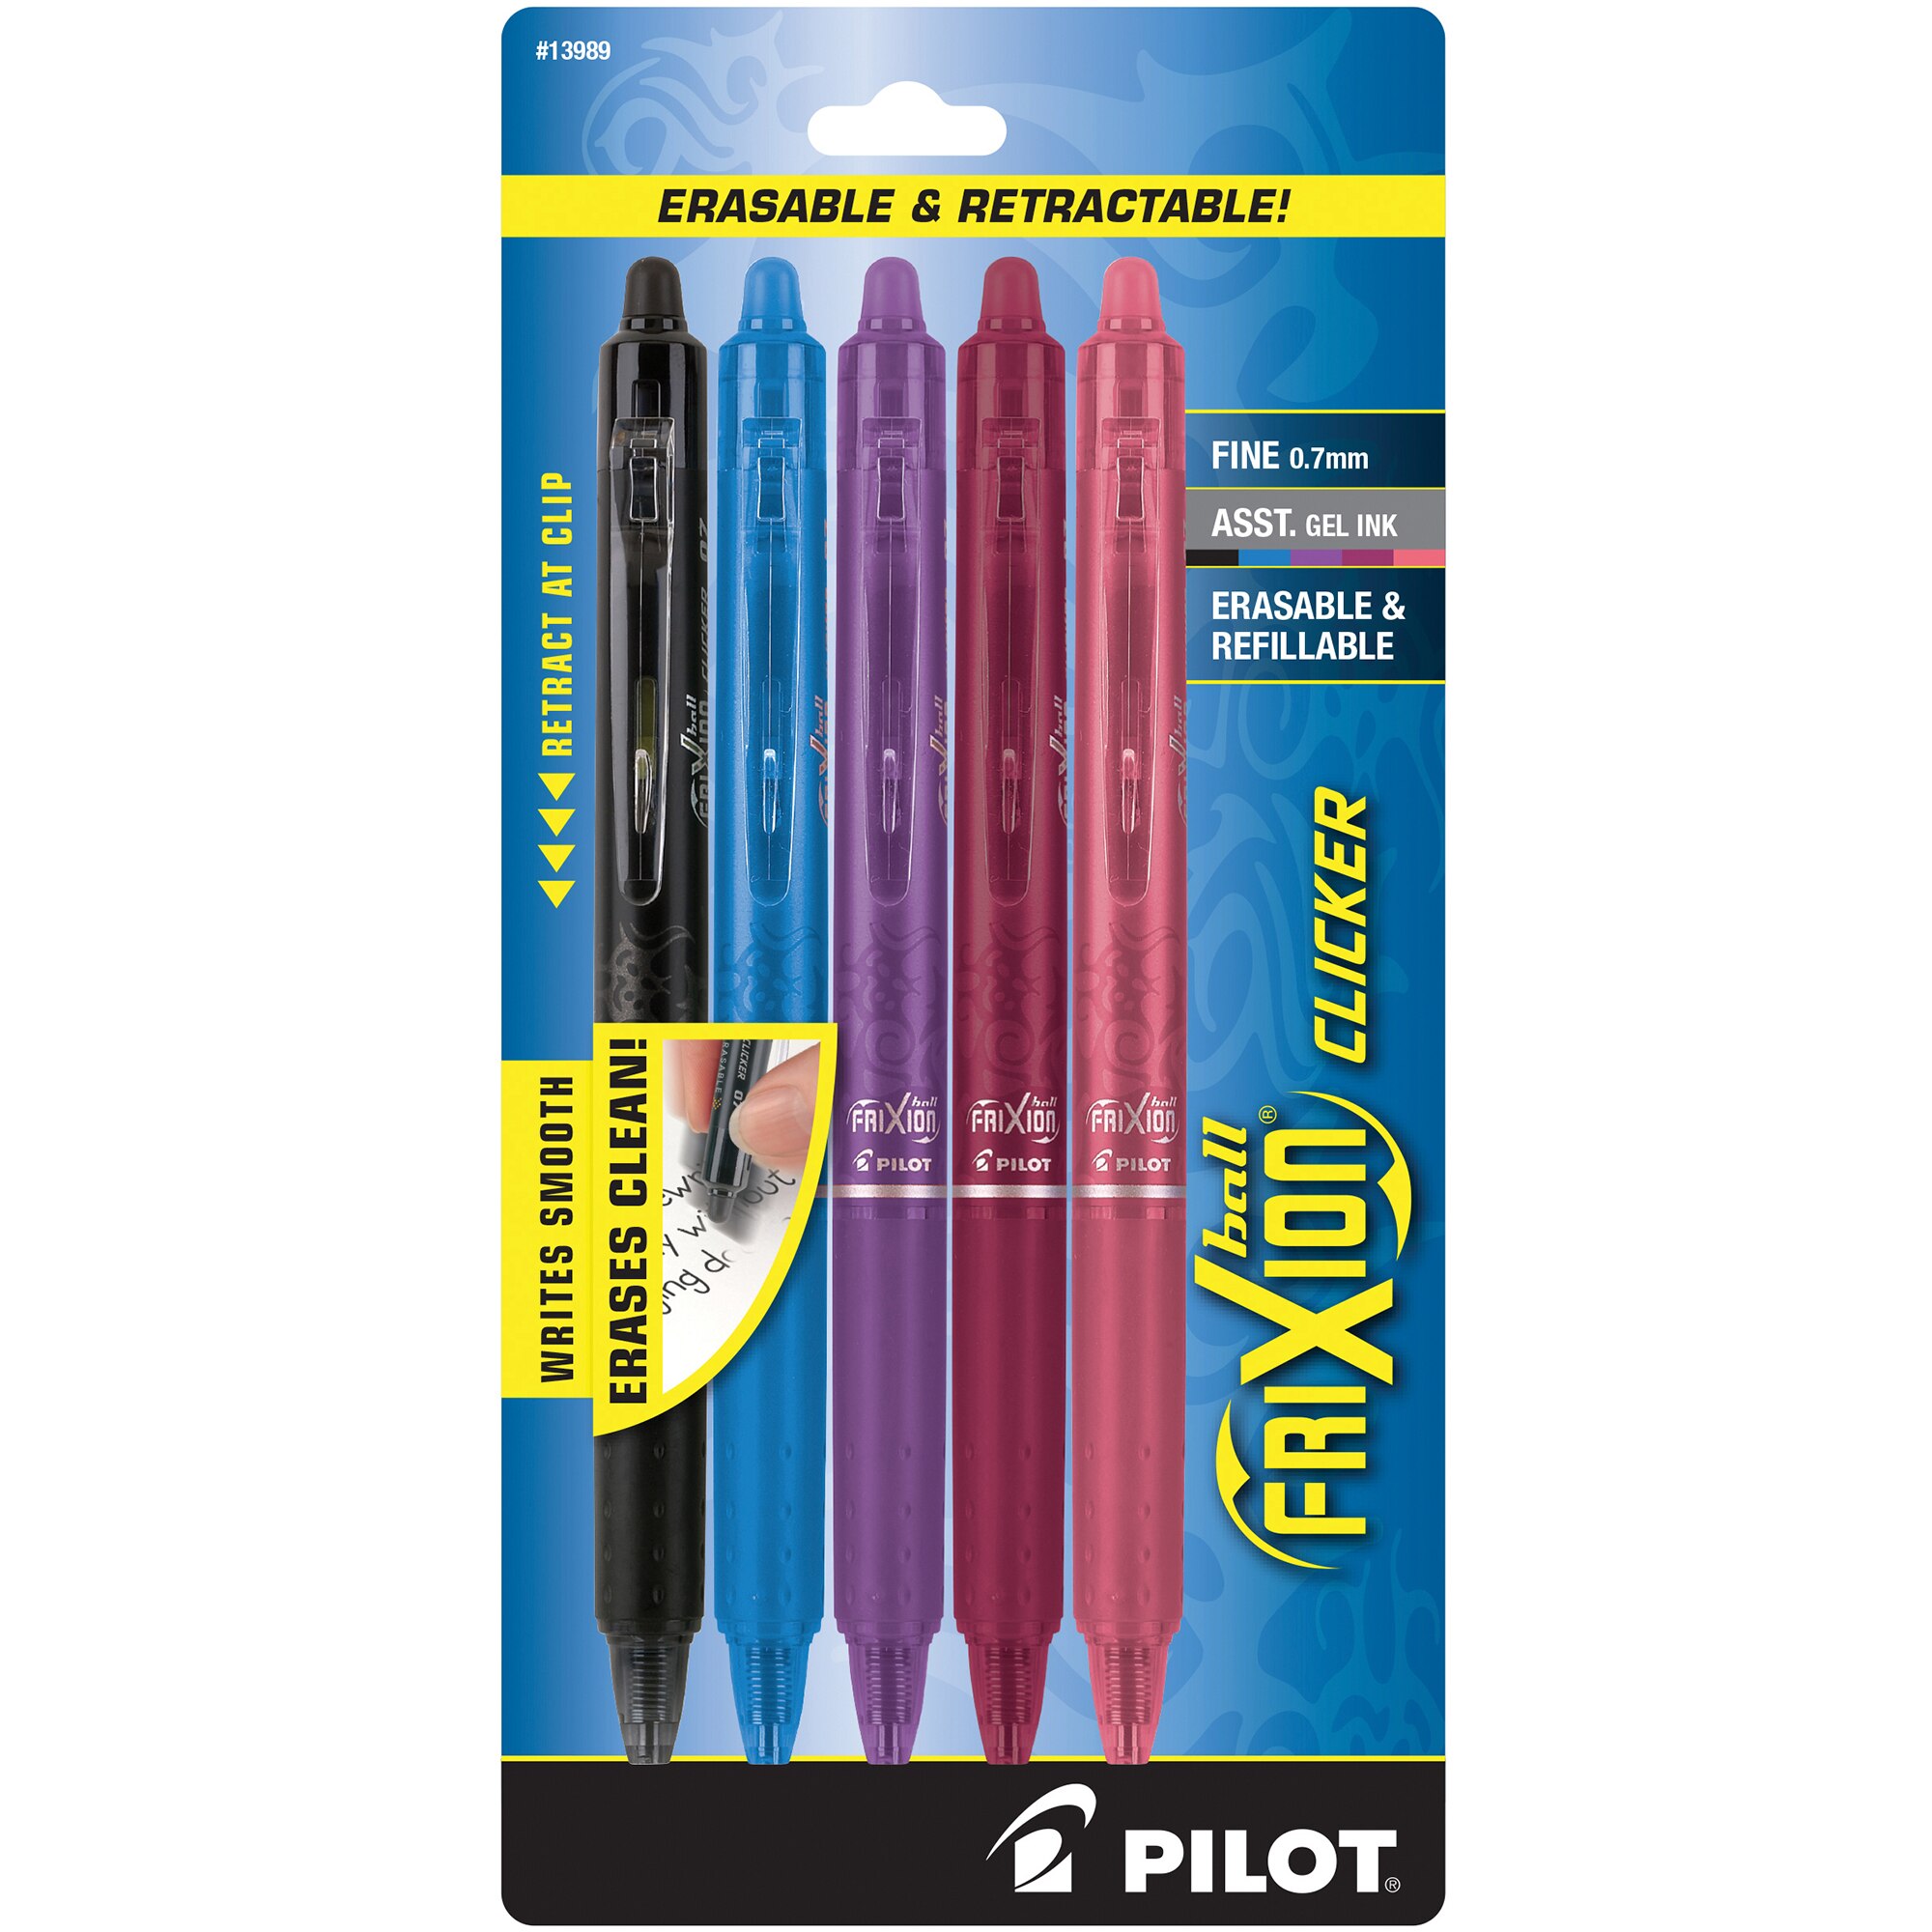 Pilot FriXion Clicker Erasable Gel Ink Pen Fine Point (0.7mm) Assorted Colors 5 Count